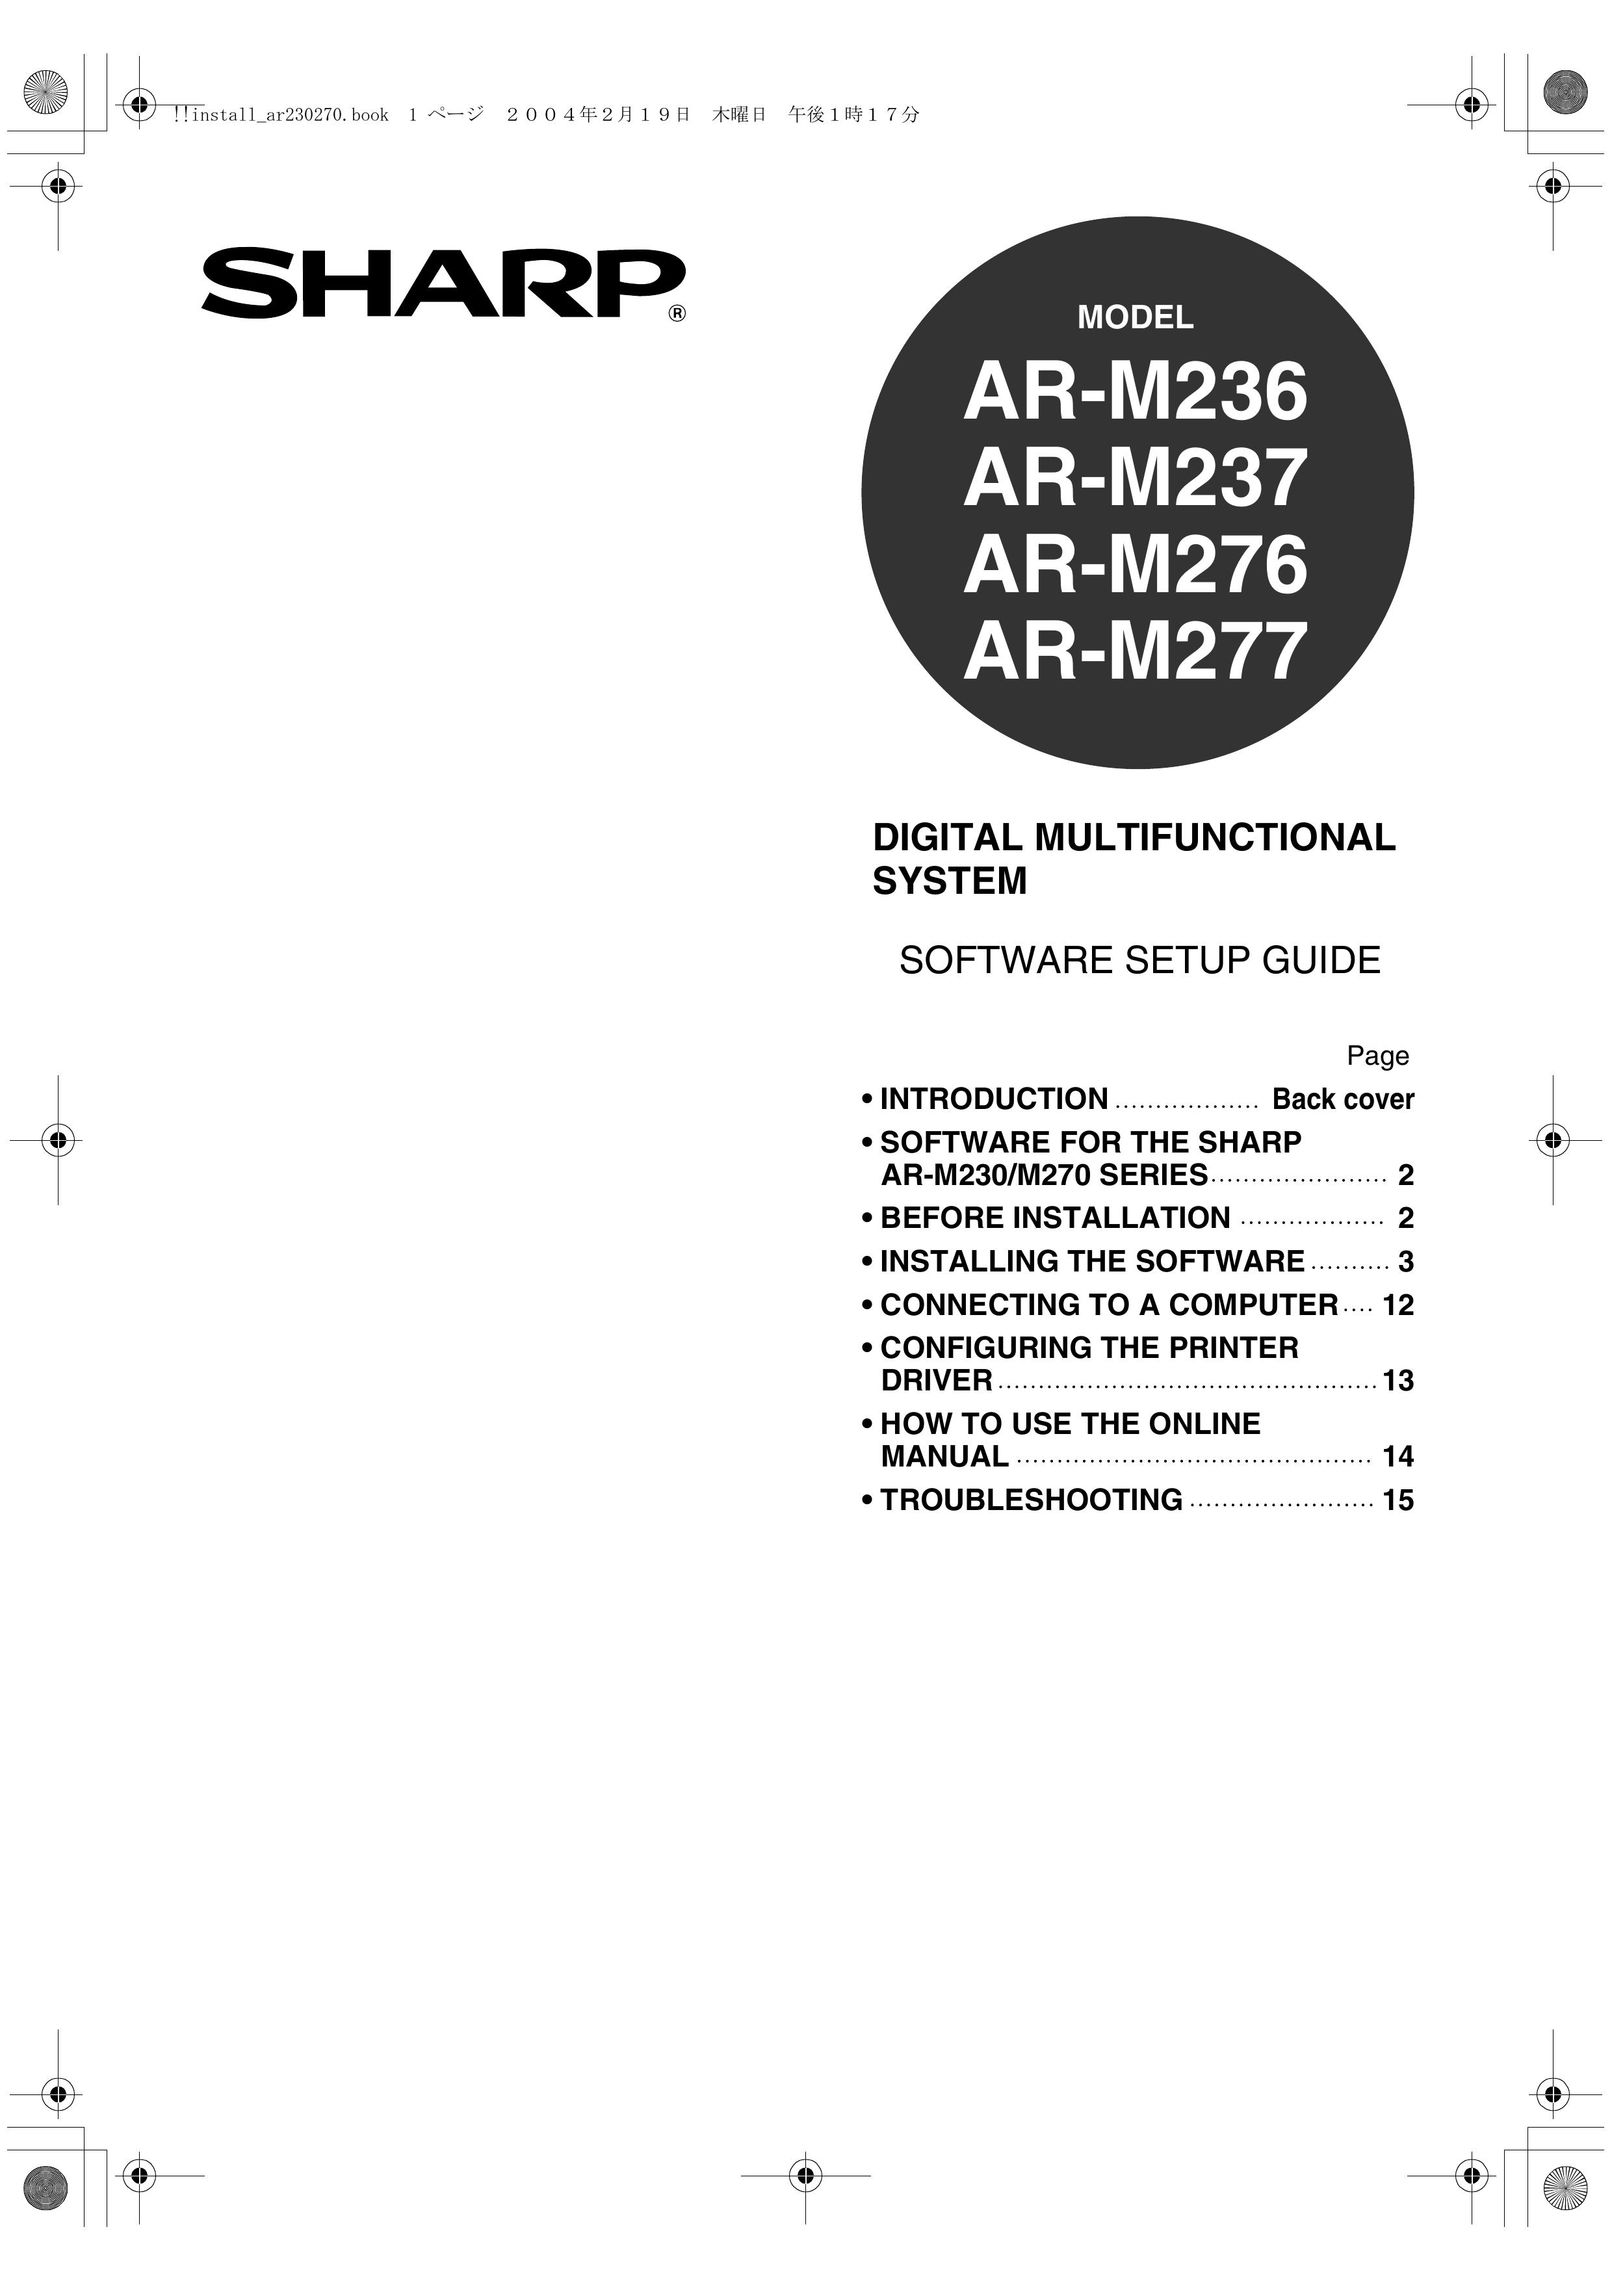 Sharp AR-M276 Fax Machine User Manual